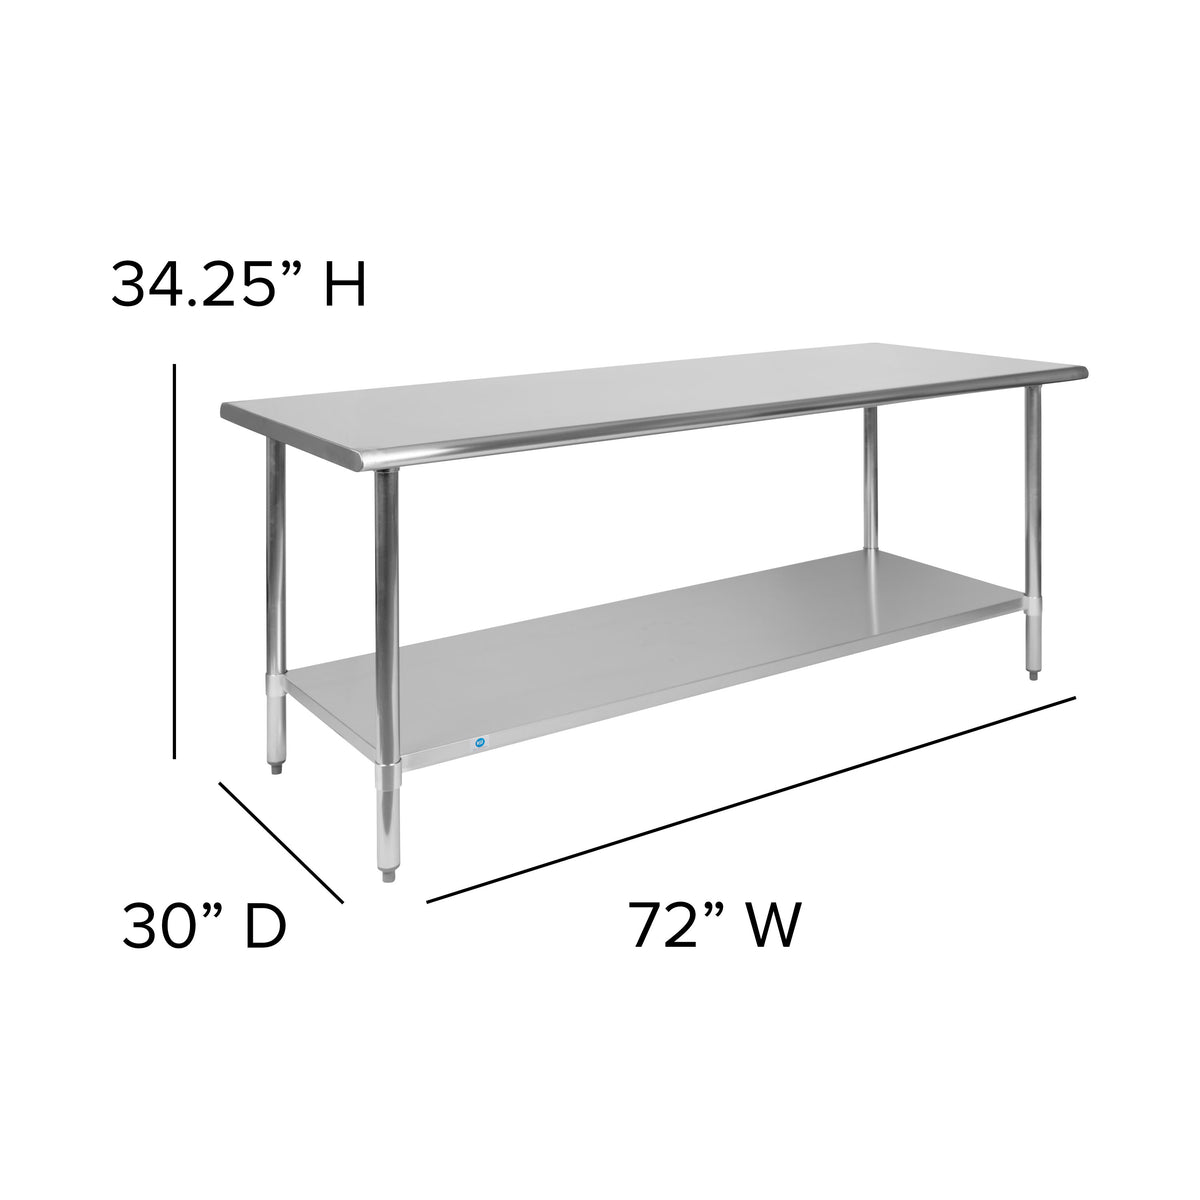 72"W x 30"D |#| Stainless Steel 18 Gauge Work Table with Undershelf, NSF - 72"W x 30"D x 34.5"H